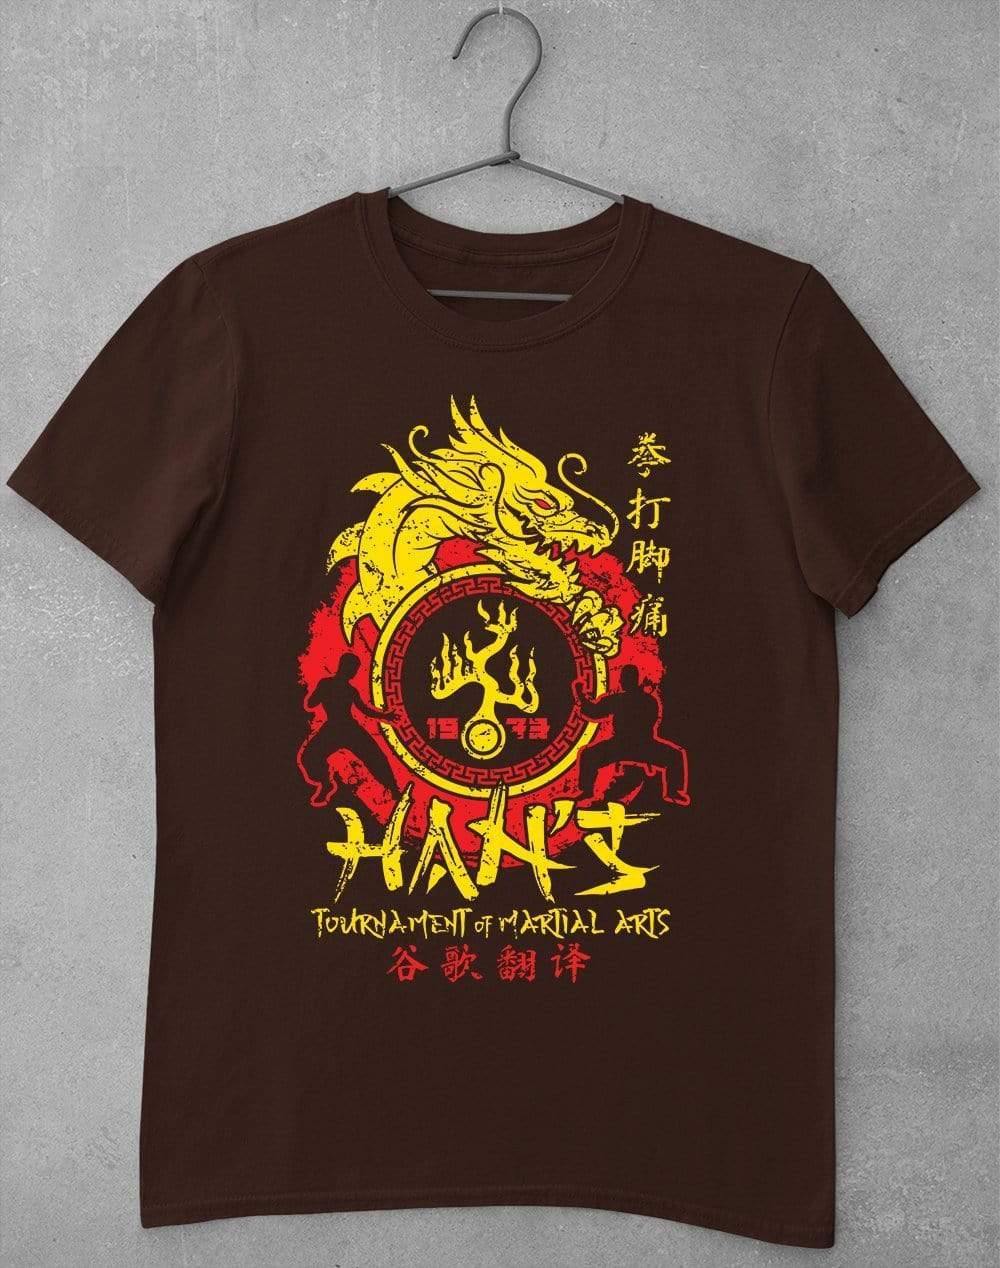 Han's Tournament of Martial Arts T-Shirt S / Dark Chocolate  - Off World Tees